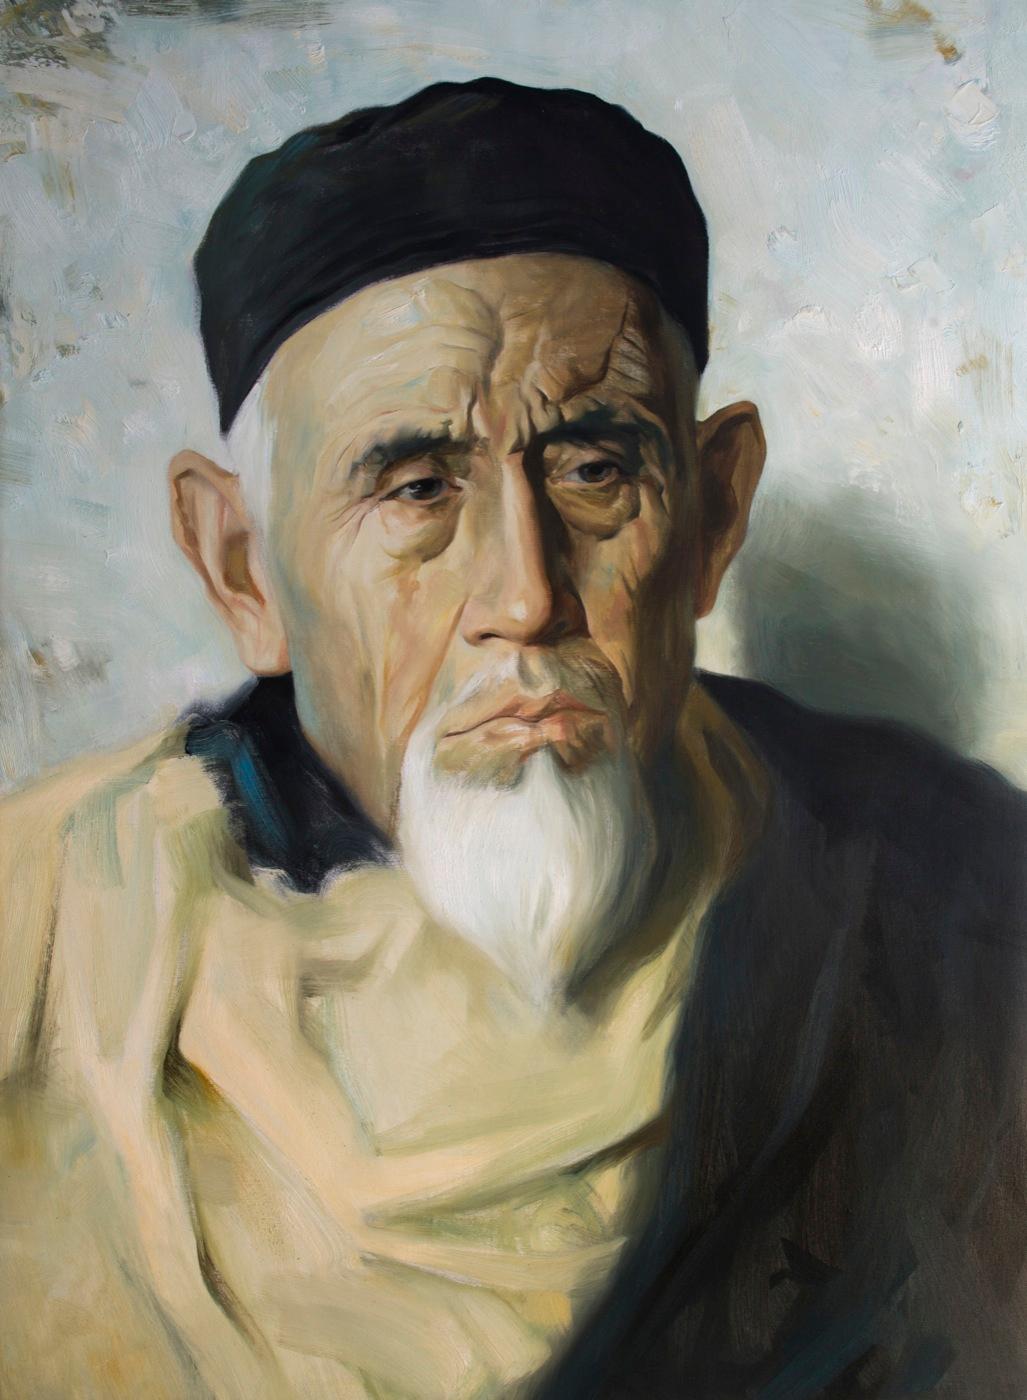 Older's portrait. Original modern art painting